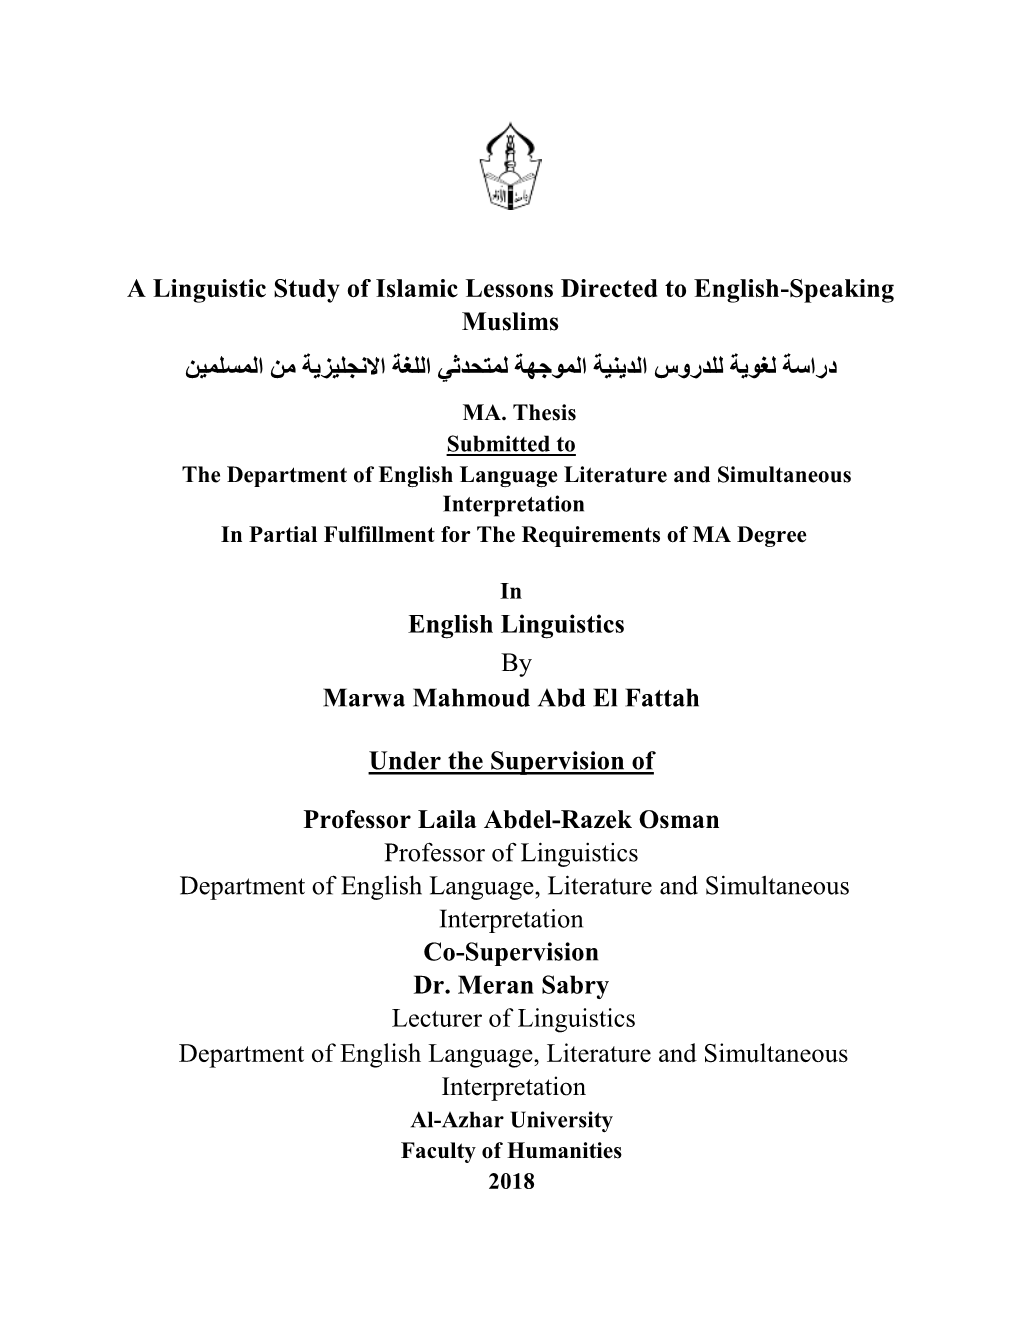 A Linguistic Study of Islamic Lessons Directed to English-Speaking Muslims دراسة لغوية للدروس الدينية الموجهة لمتحدثي اللغة االنجليزية من المسلمين